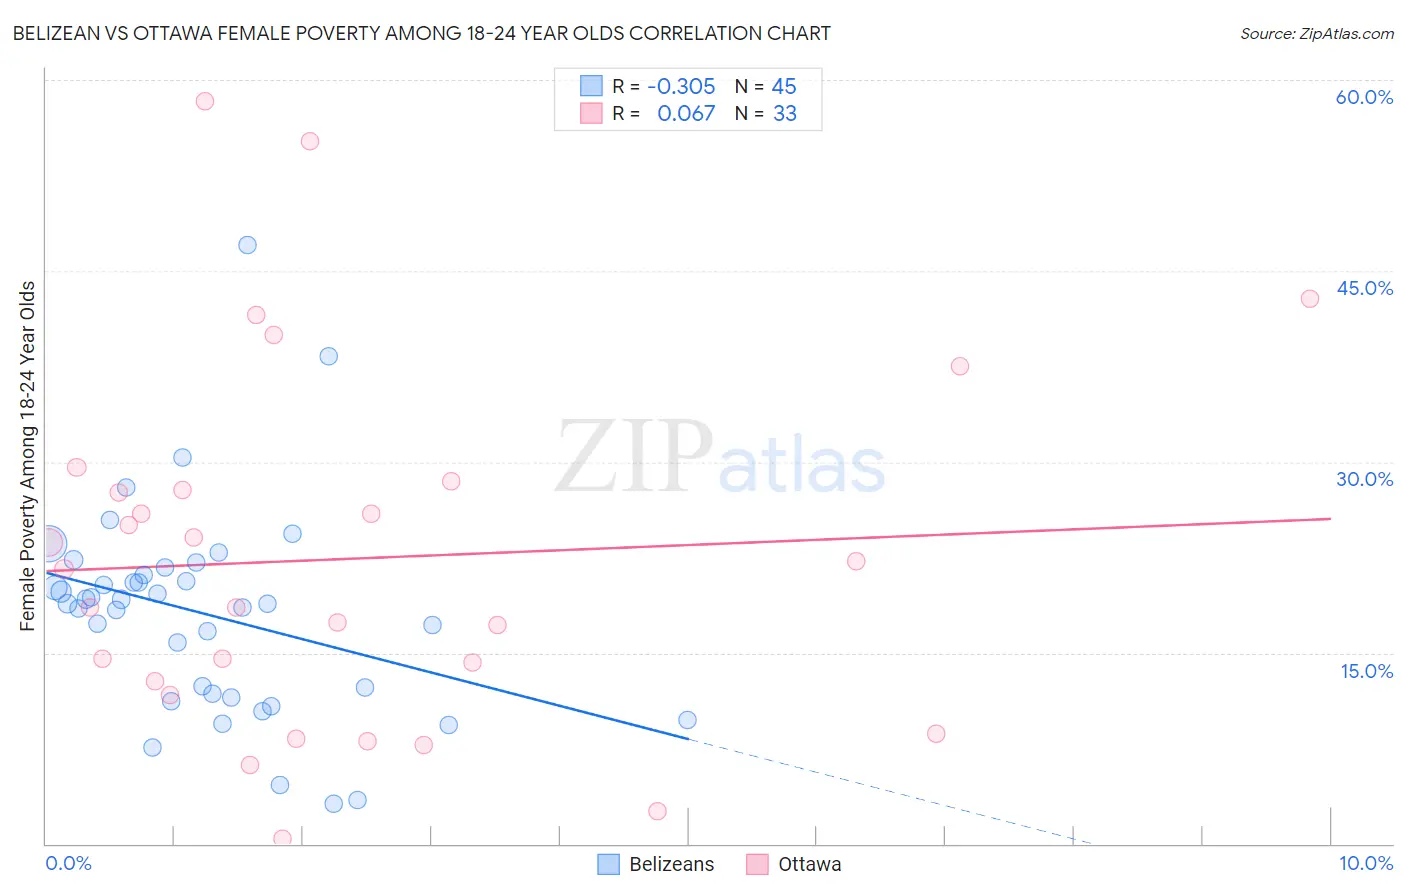 Belizean vs Ottawa Female Poverty Among 18-24 Year Olds